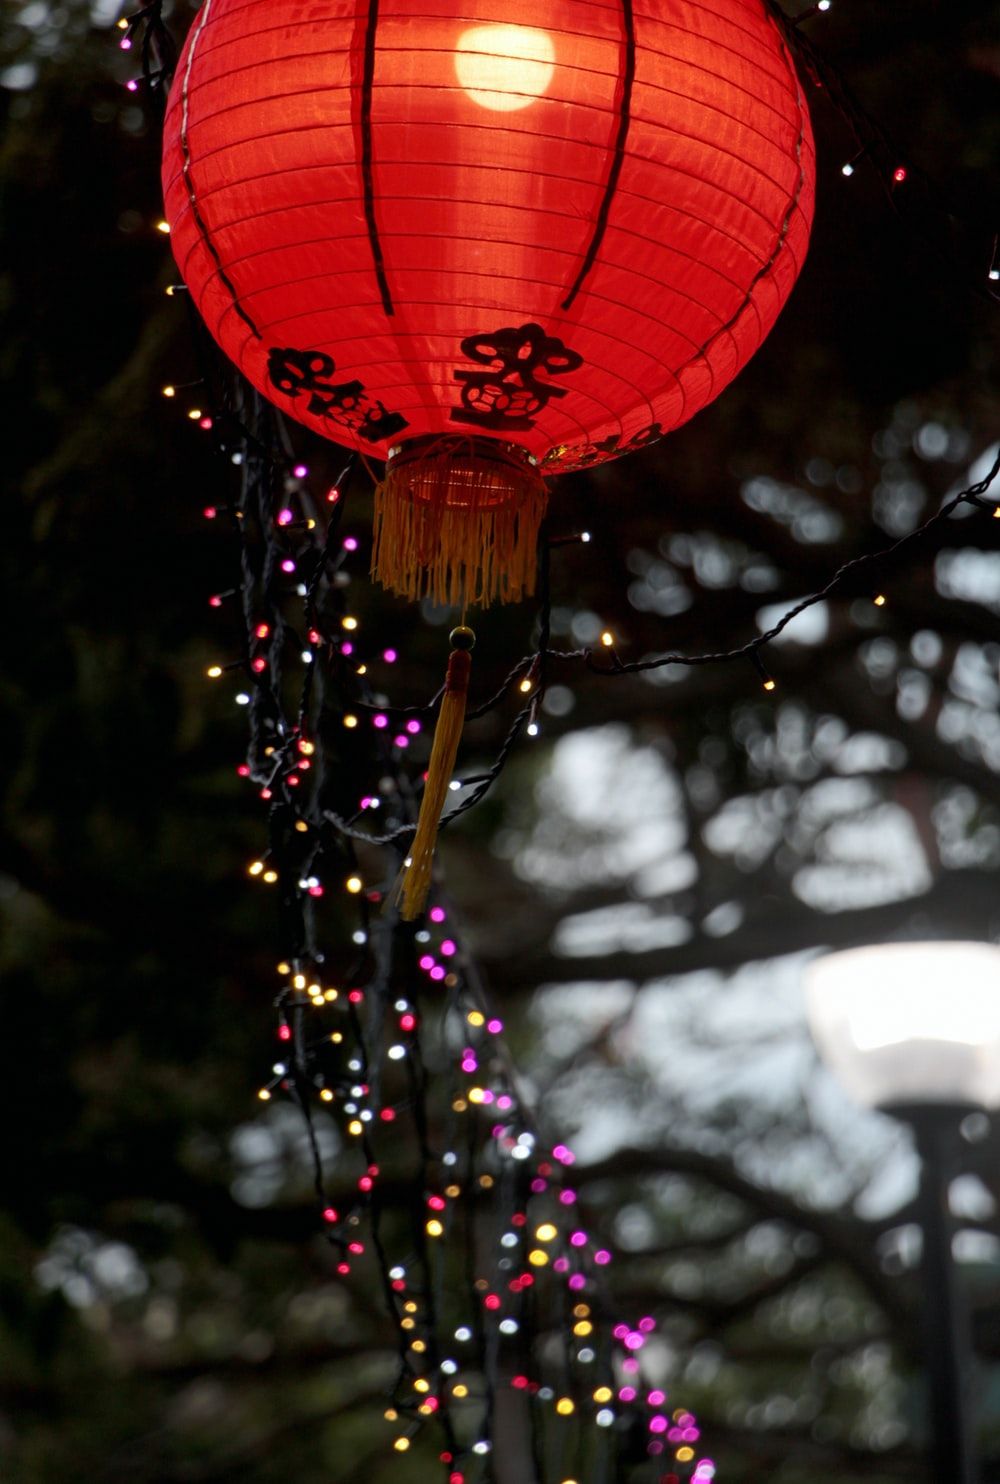 Lantern Festival Picture. Download Free Image